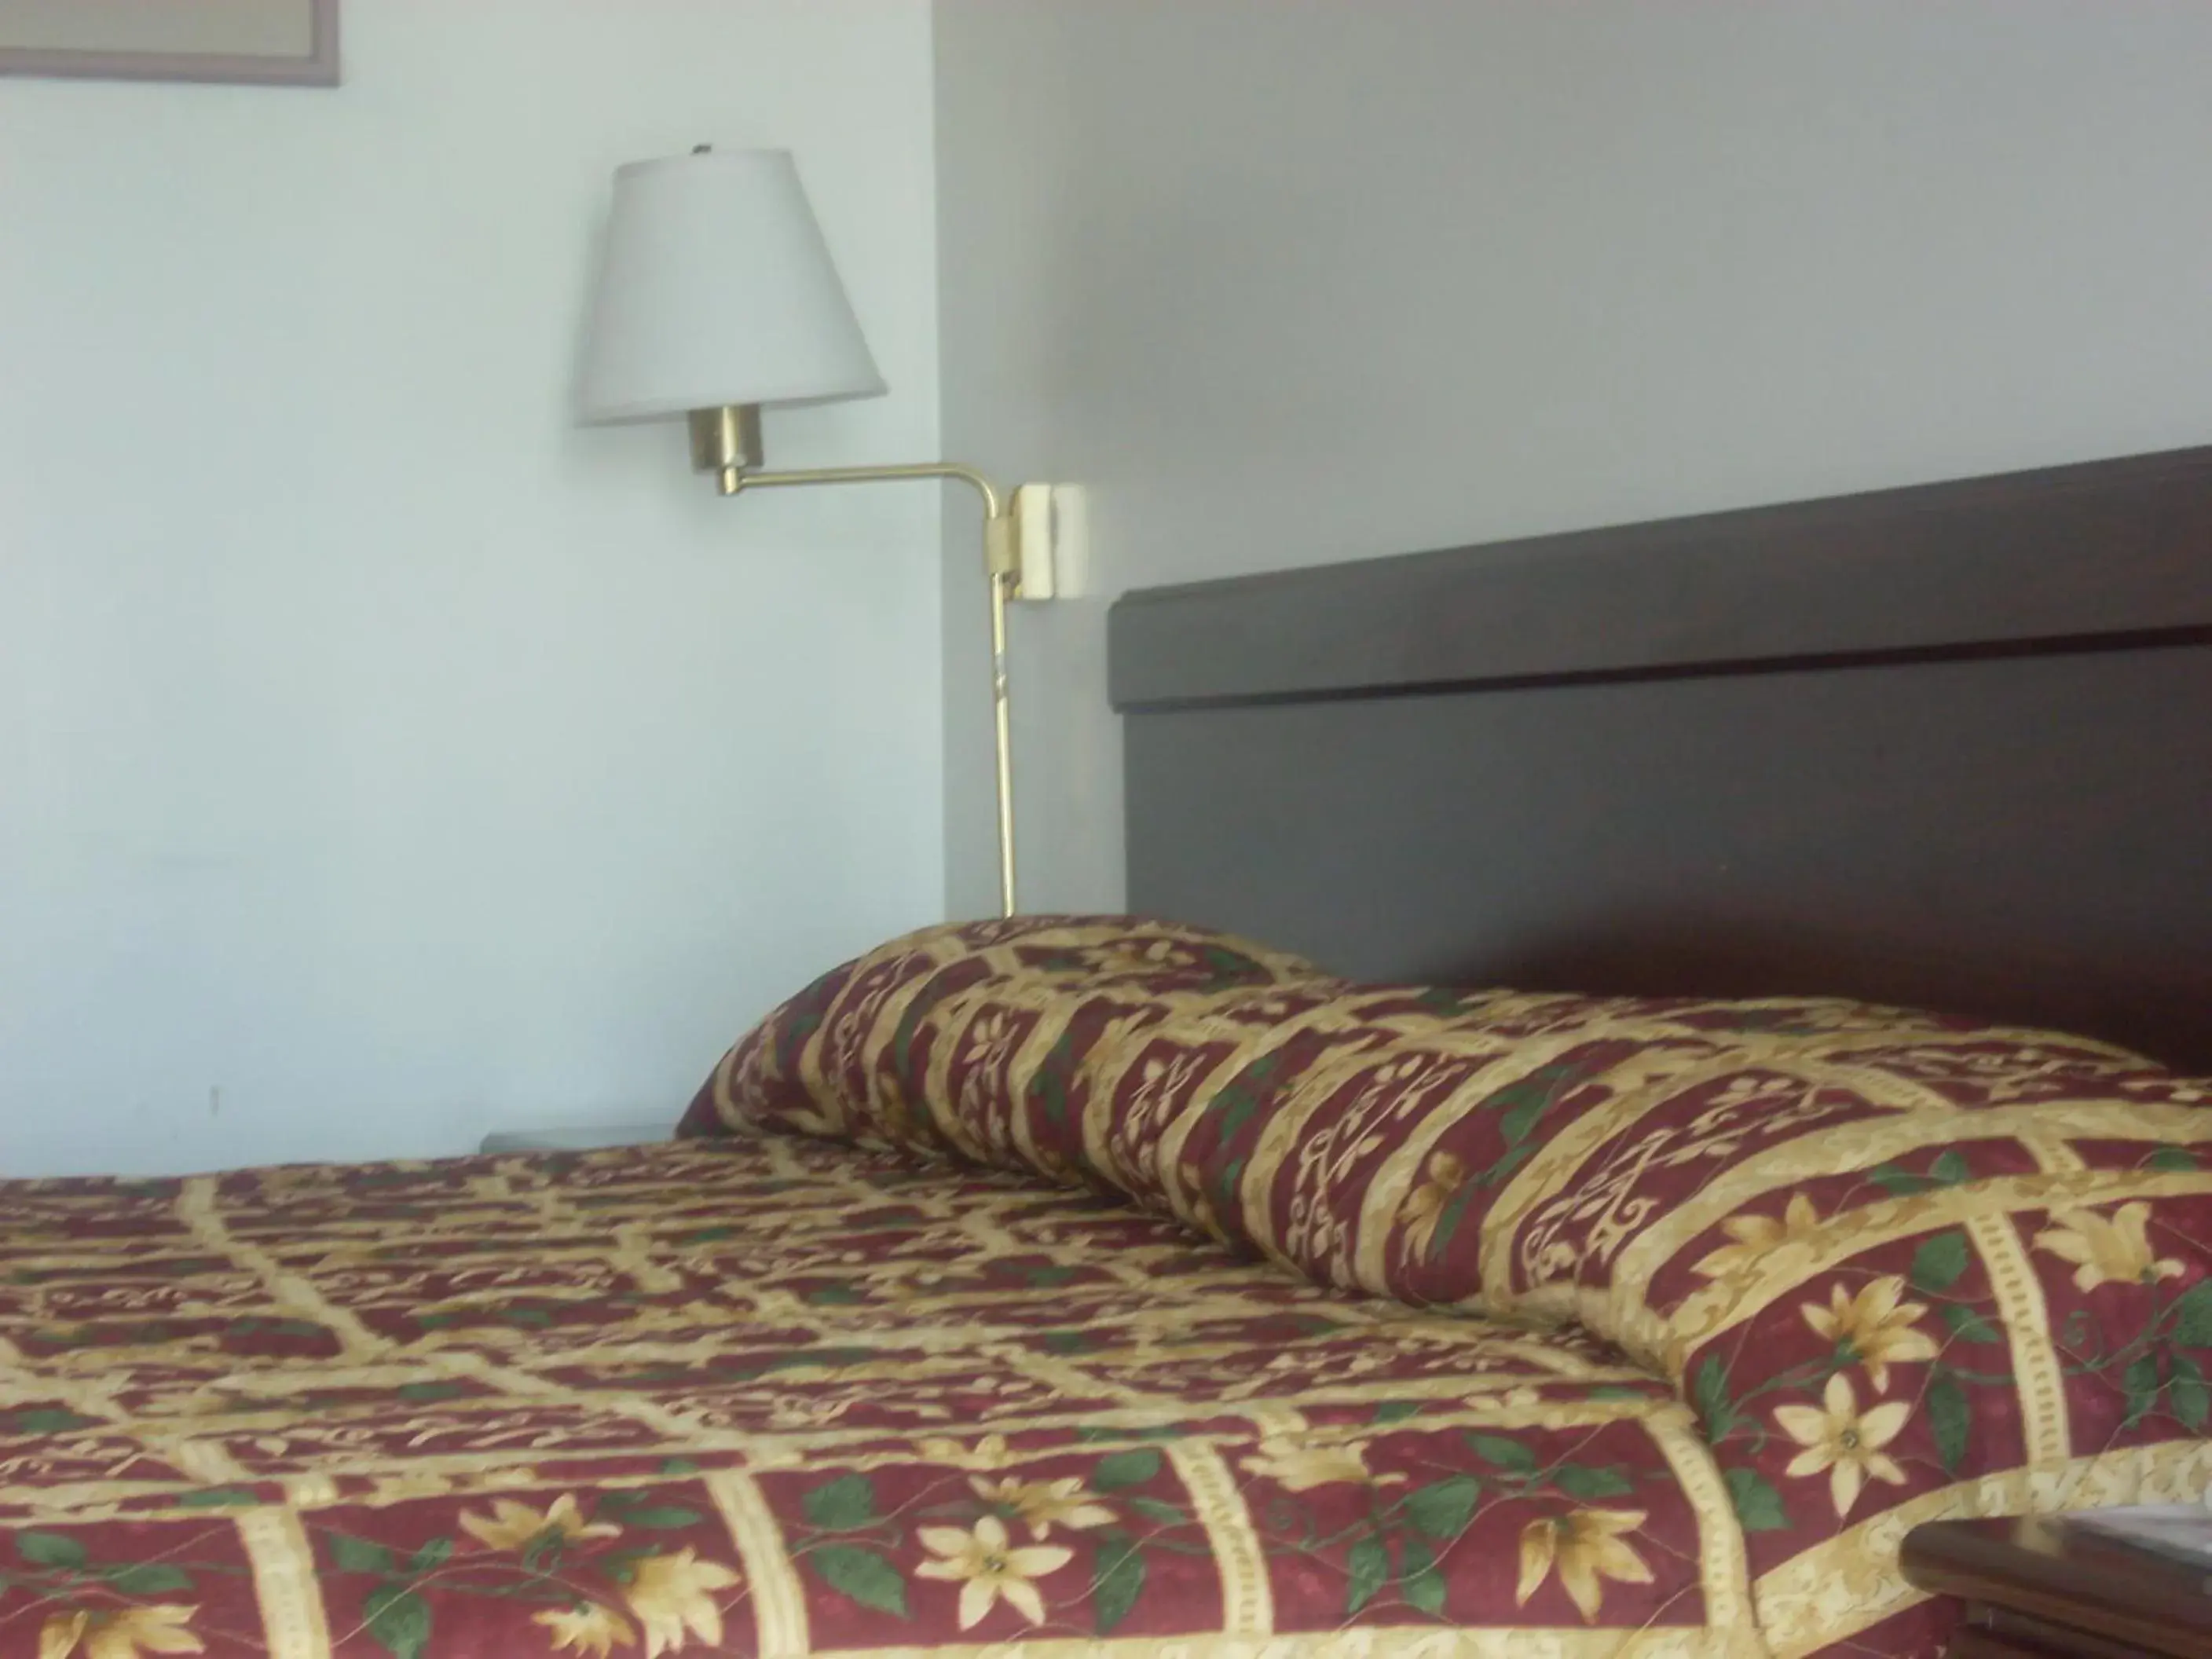 Decorative detail, Bed in Economy Inn Seaside